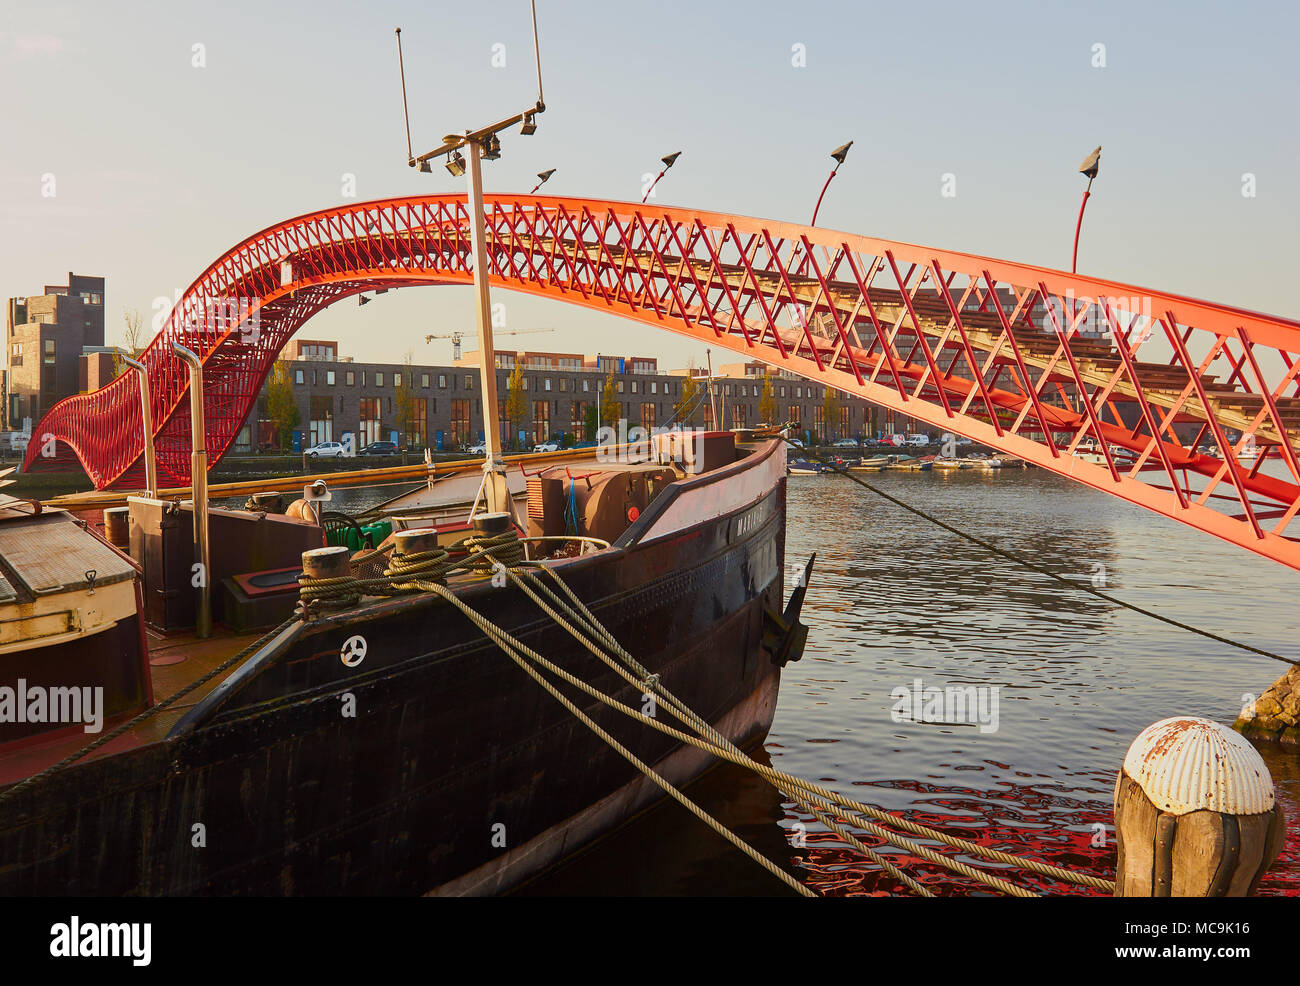 Ponte di Python (Pythonbrug), Oosterdokseiland (Eastern Docklands), Amsterdam, Paesi Bassi. Foto Stock